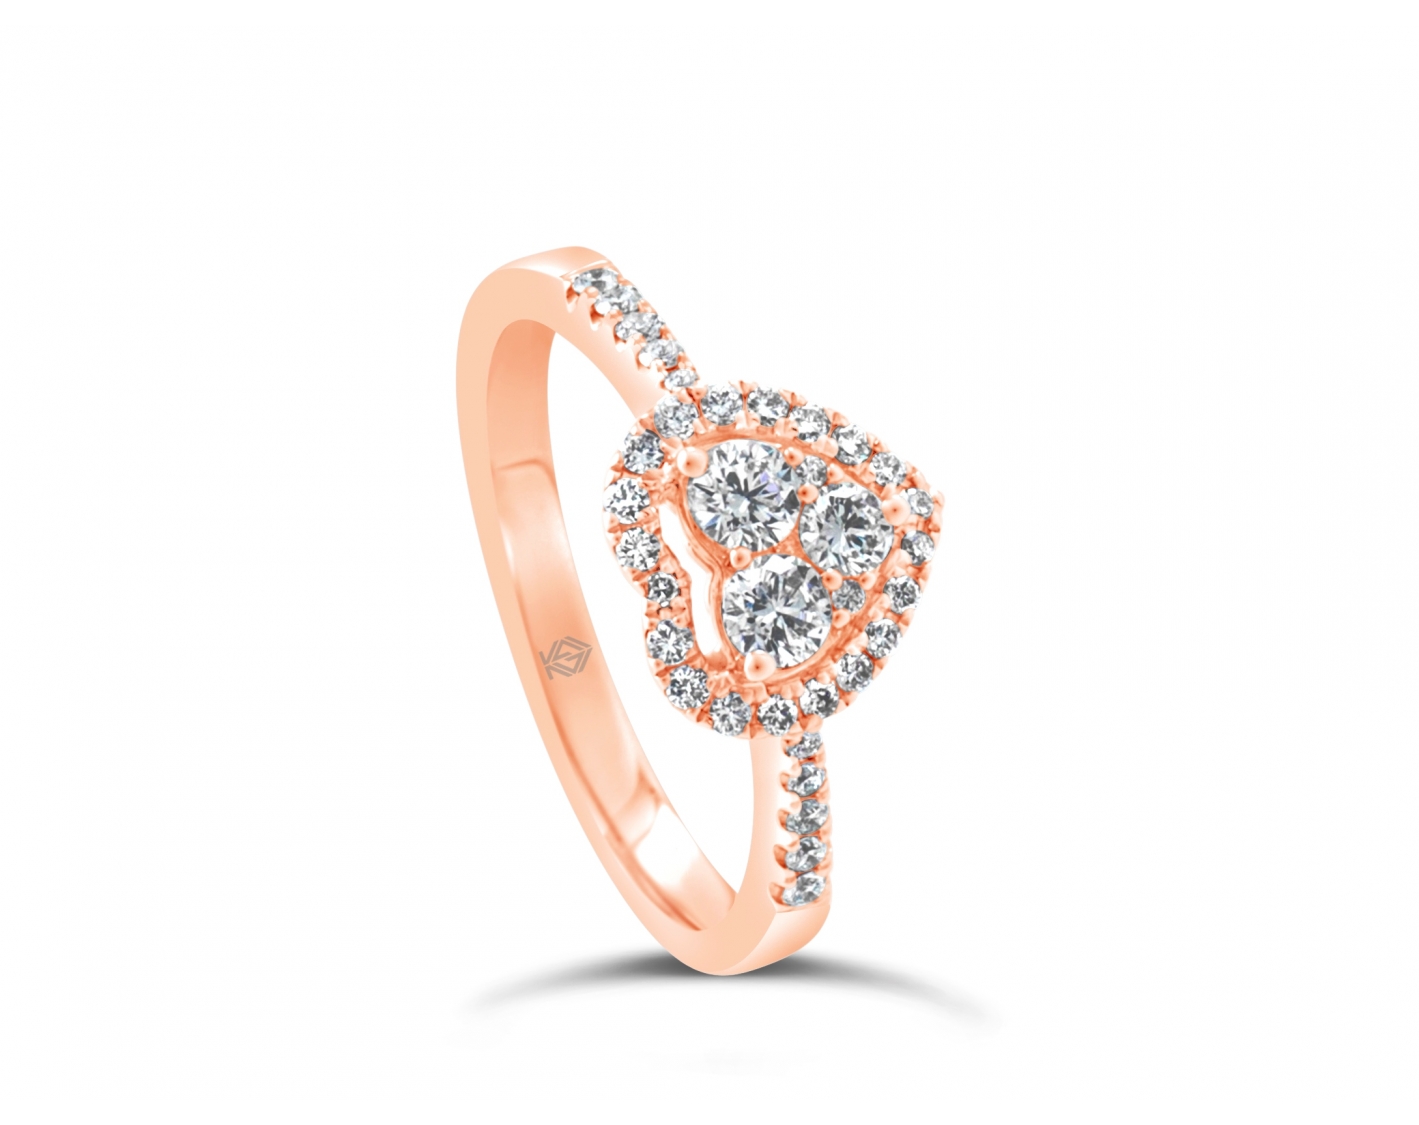 18k white gold heart shaped halo illusion set engagement ring with round pave set diamonds Photos & images